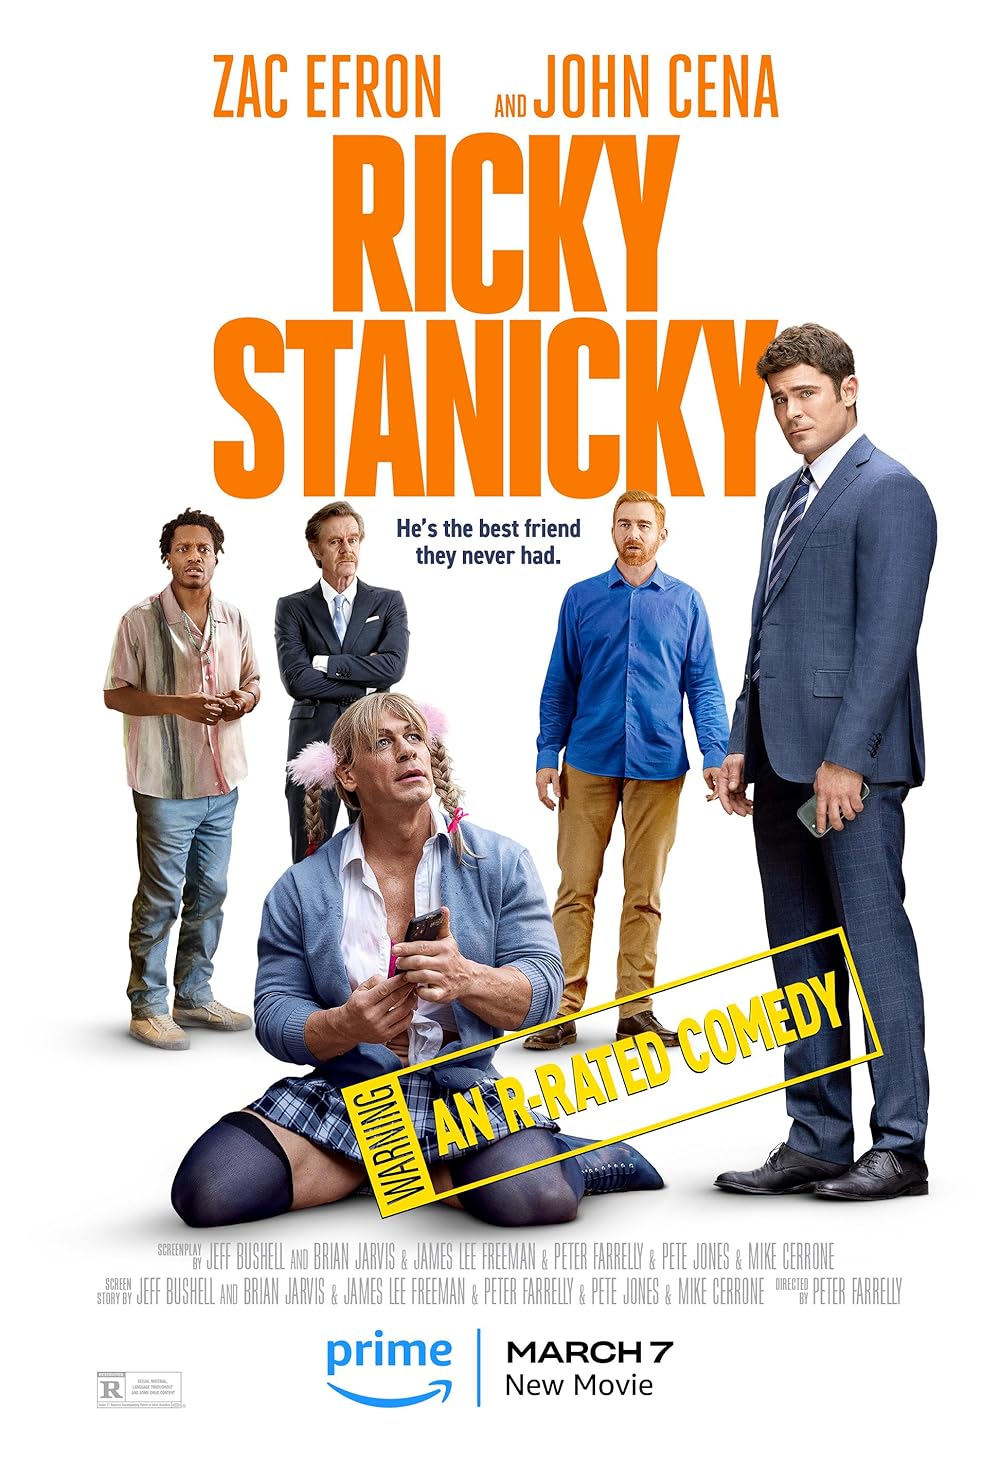 Ricky Stanicky - March 7 - Streaming on Prime VideoIn 